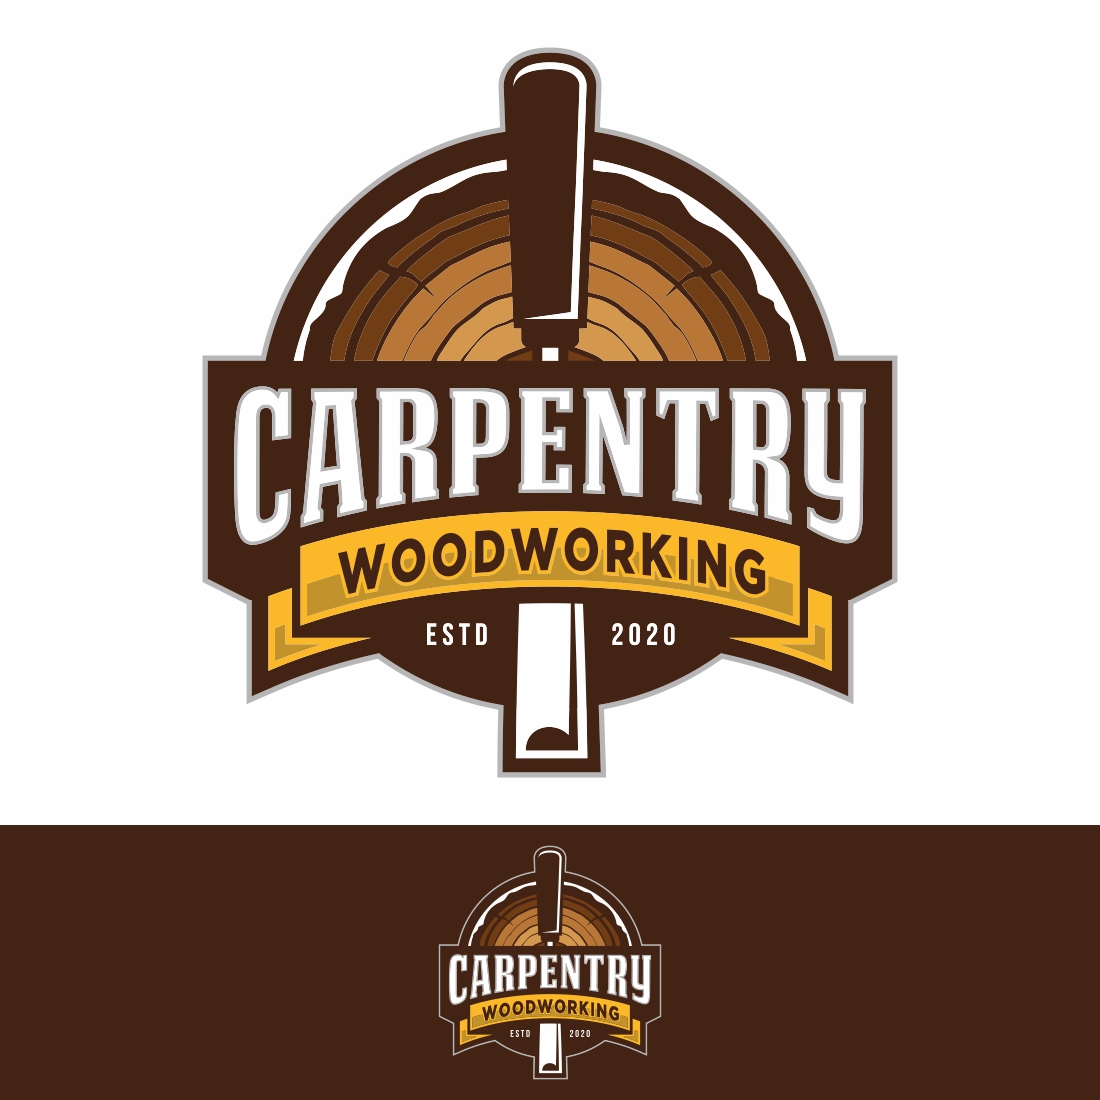 Carpentry Vintage Logo Design Template – Only $6 cover image.